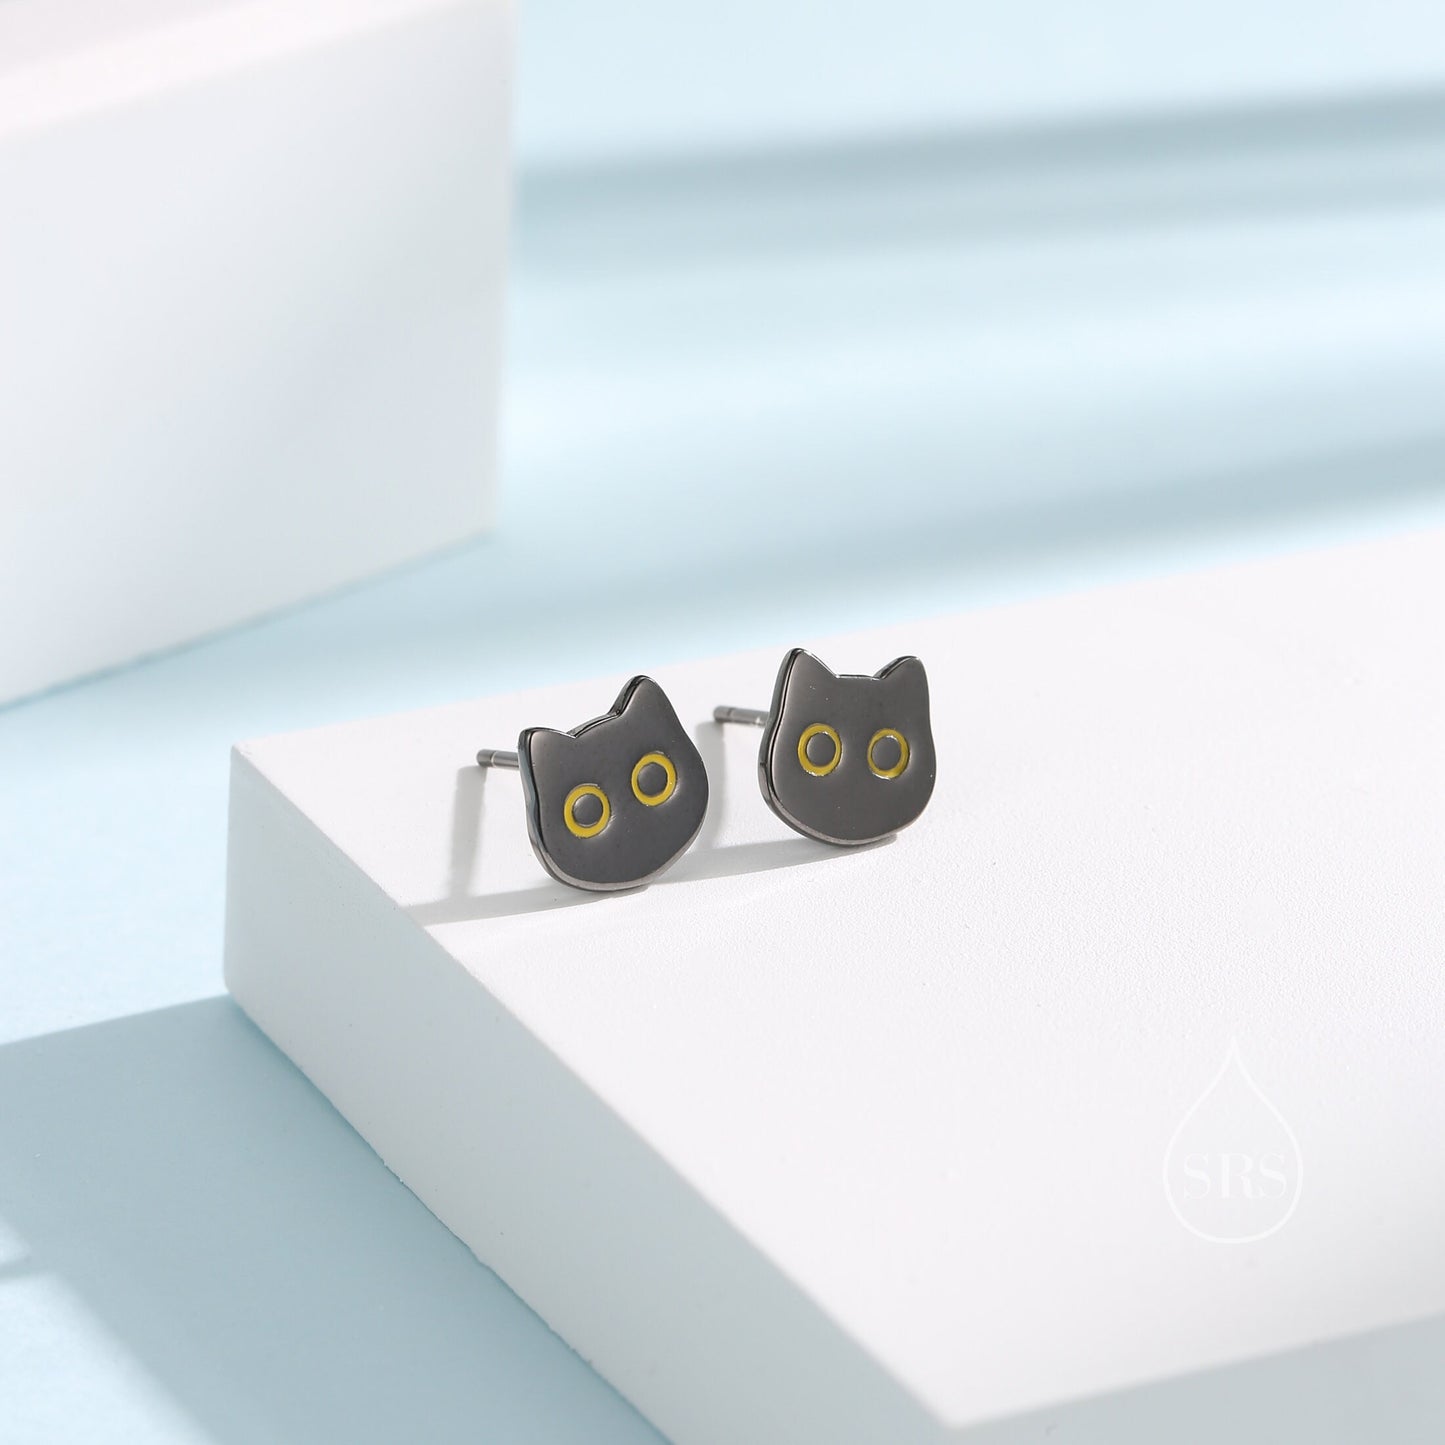 Black Cat Stud Earrings in Sterling Silver, Black Rhodium Coated Cat Earrings, Cute Cat Earrings, Silver Cat Earrings, Nature Inspired